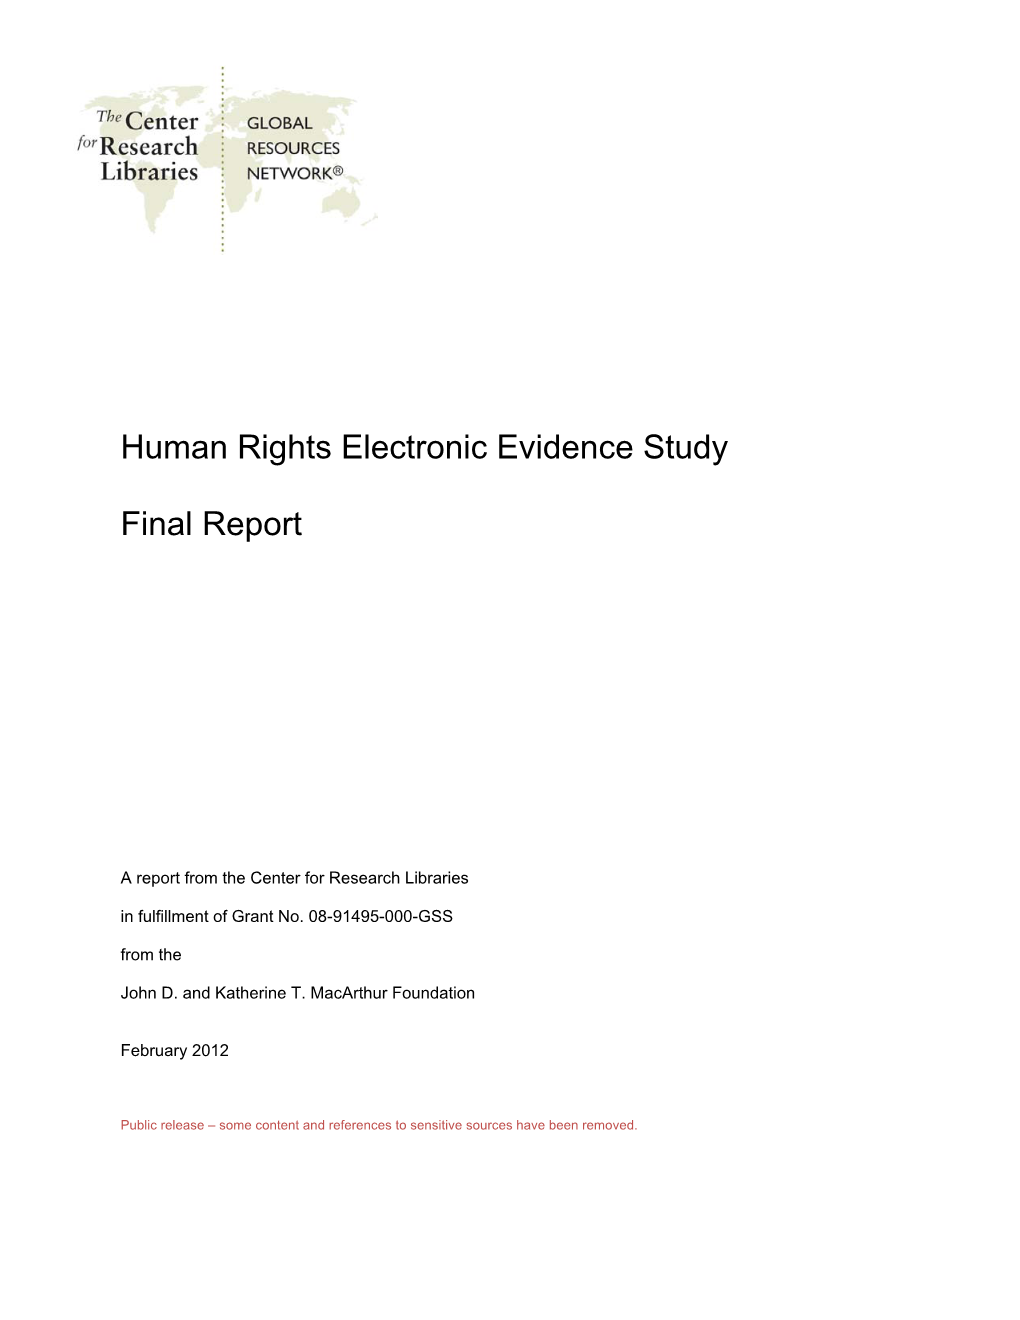 HREES Final Report